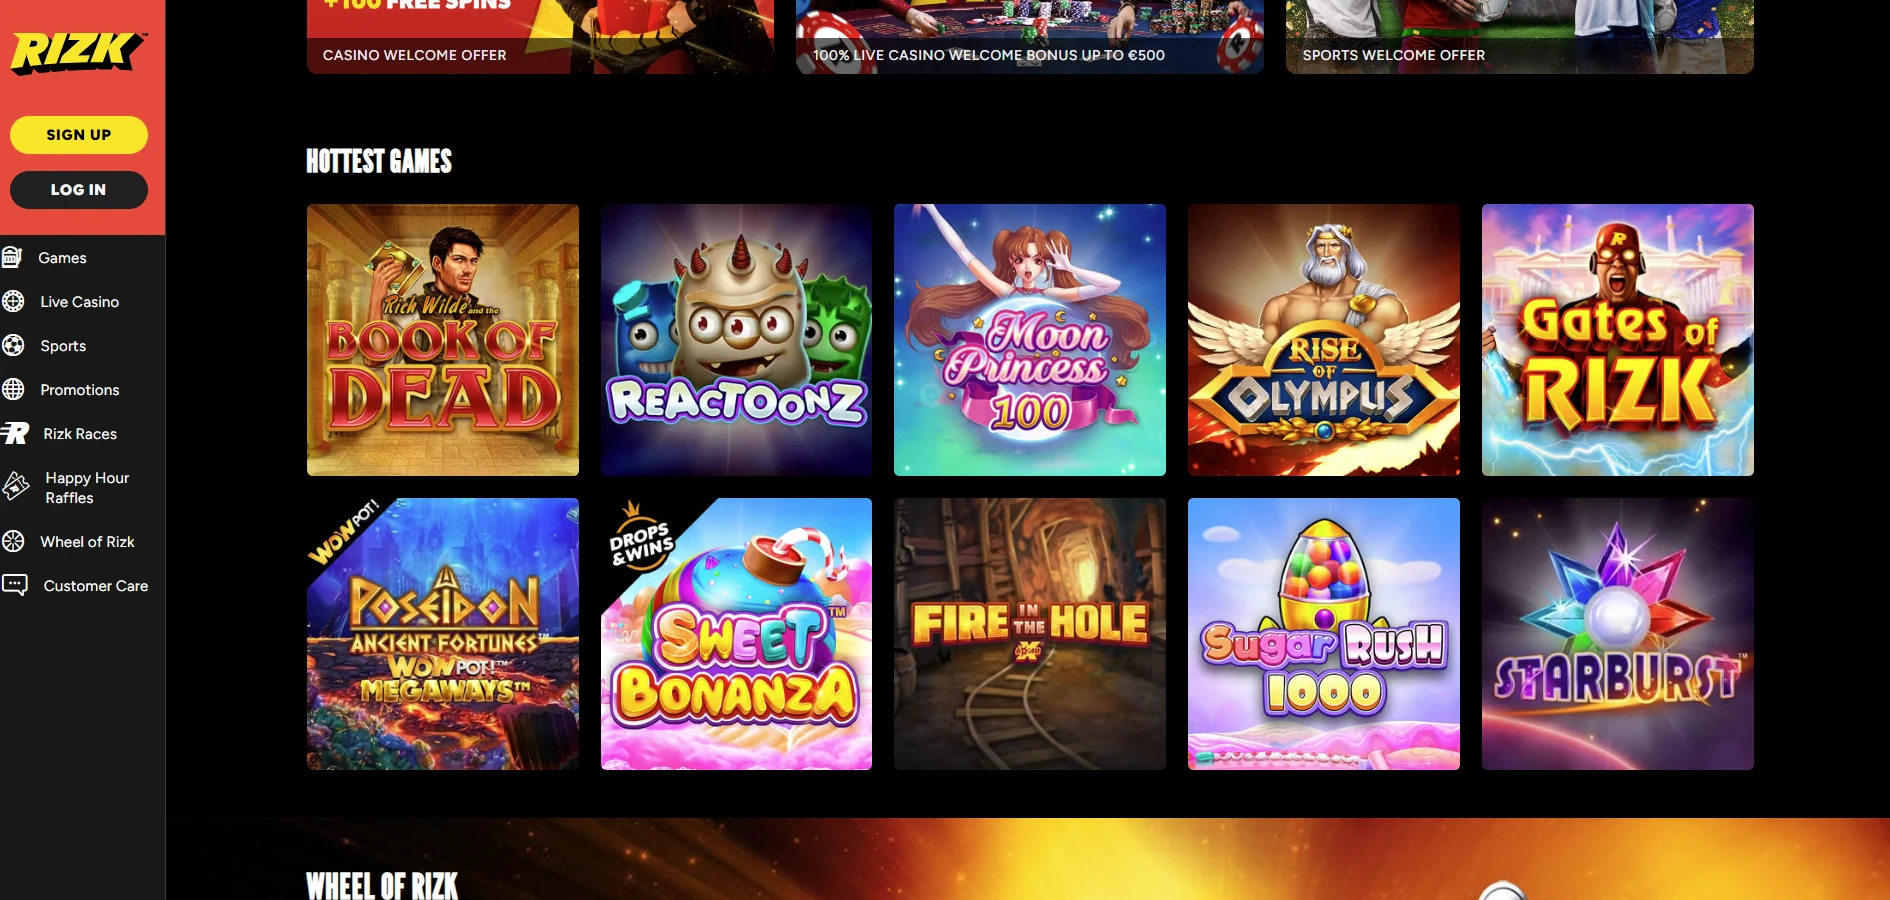 Rizk Casino Website Design